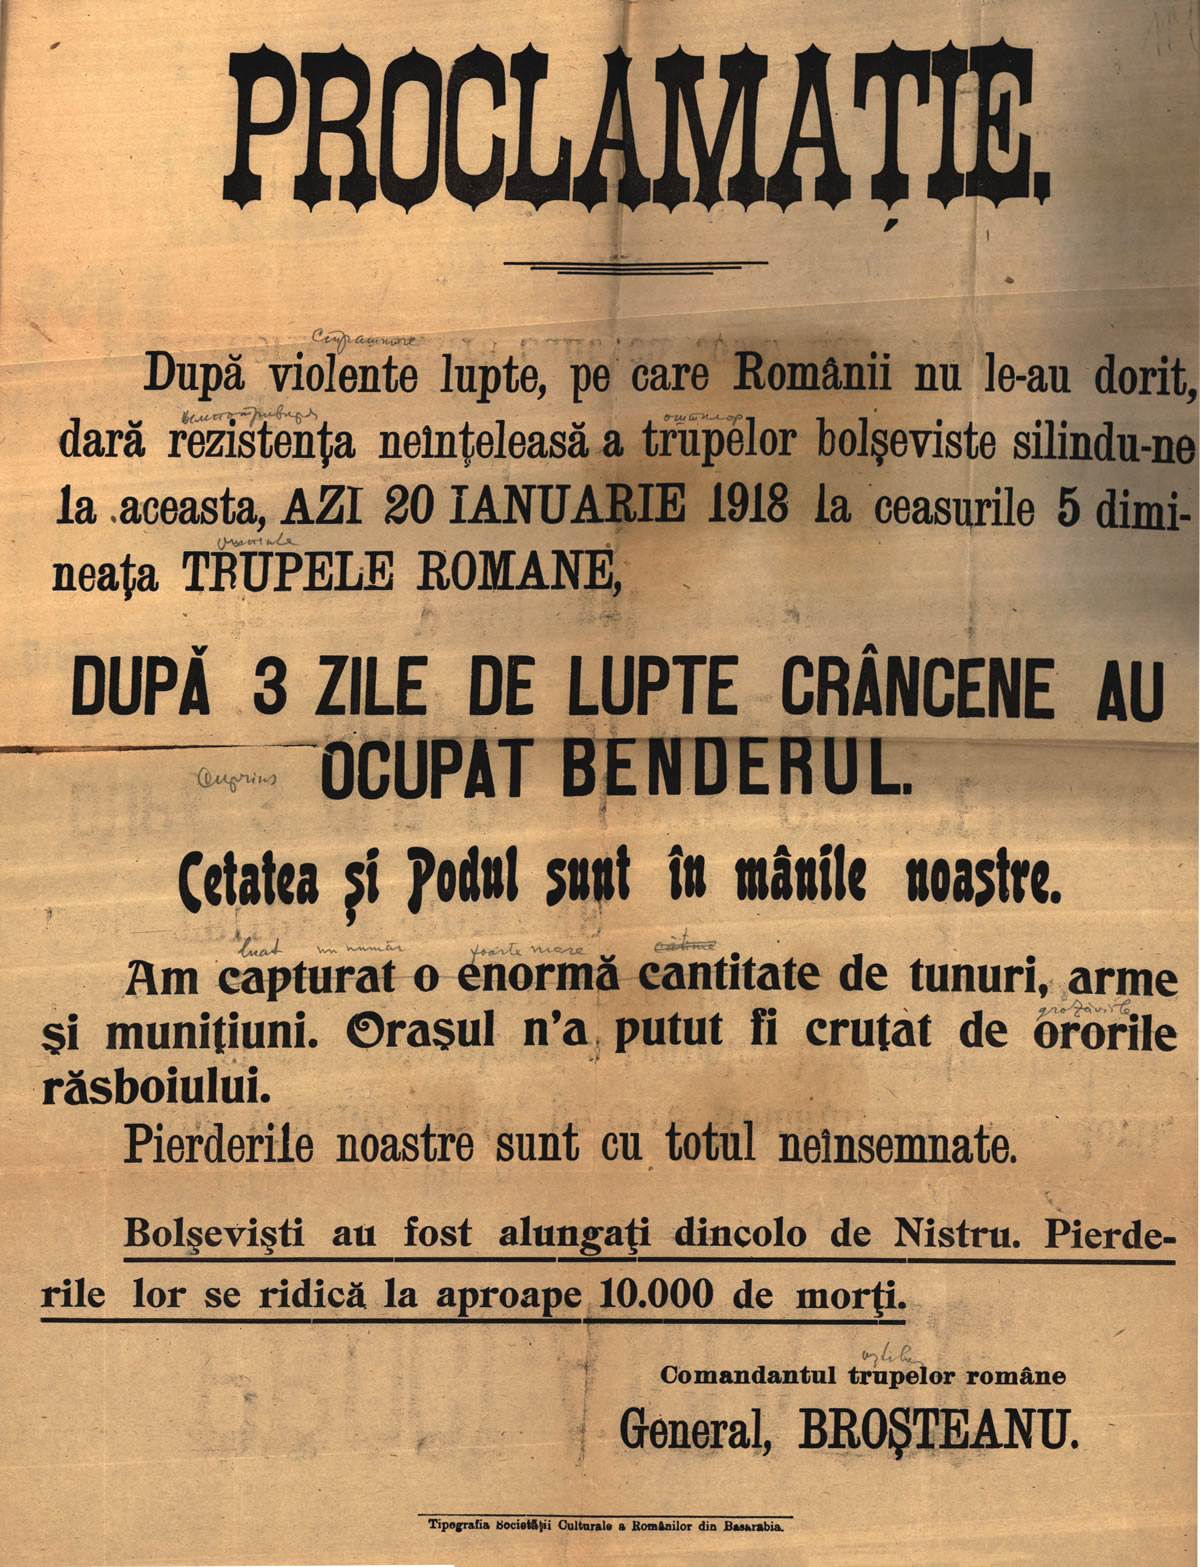 General Broşteanu's proclamation of January 20, 1918 (ANR)